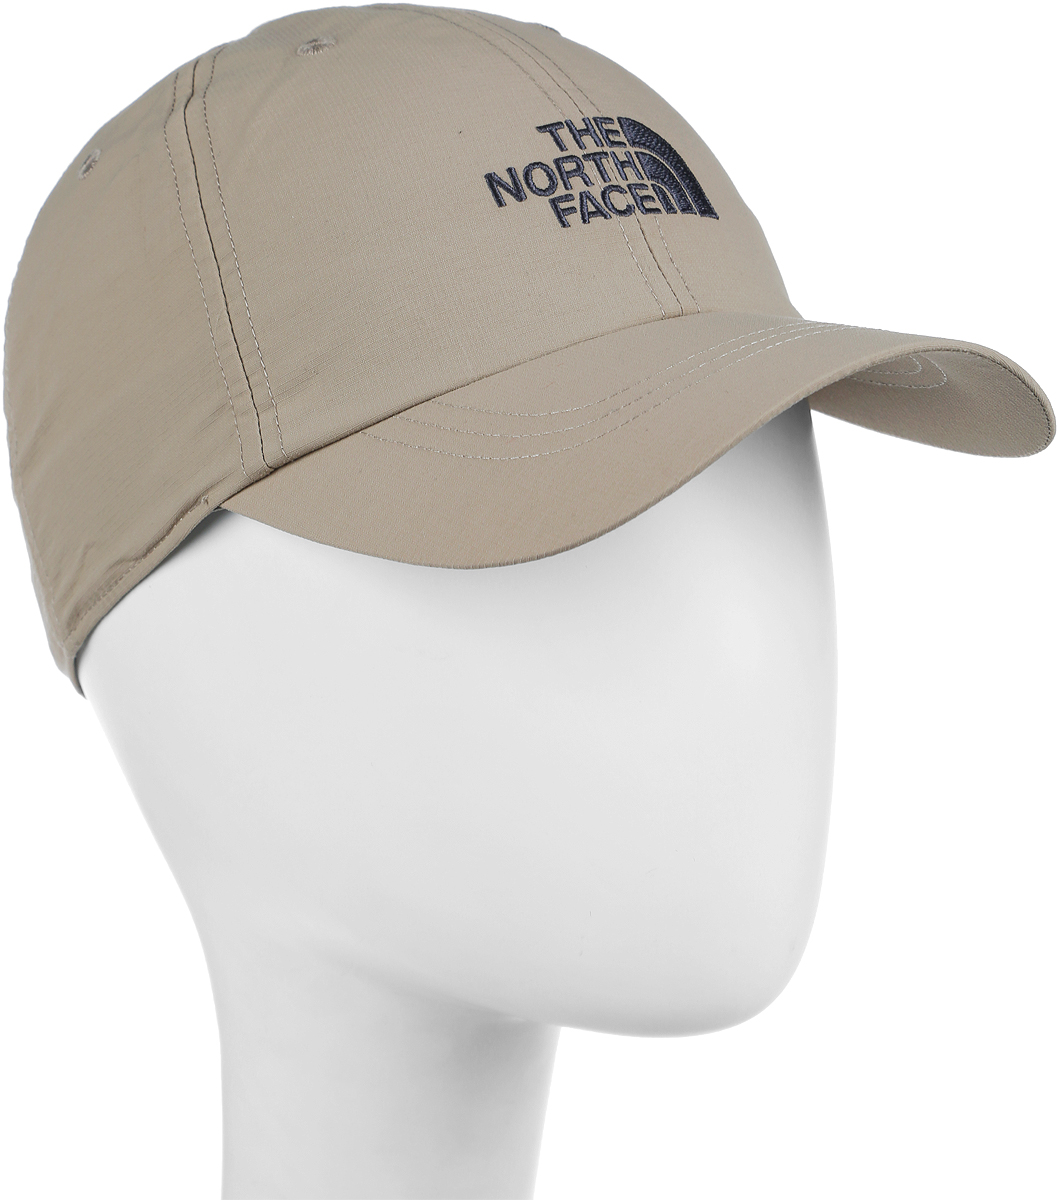 Бейсболка The North Face Horizon Hat, цвет: темно-бежевый. T0CF7W0SS. Размер S/M (56/57)